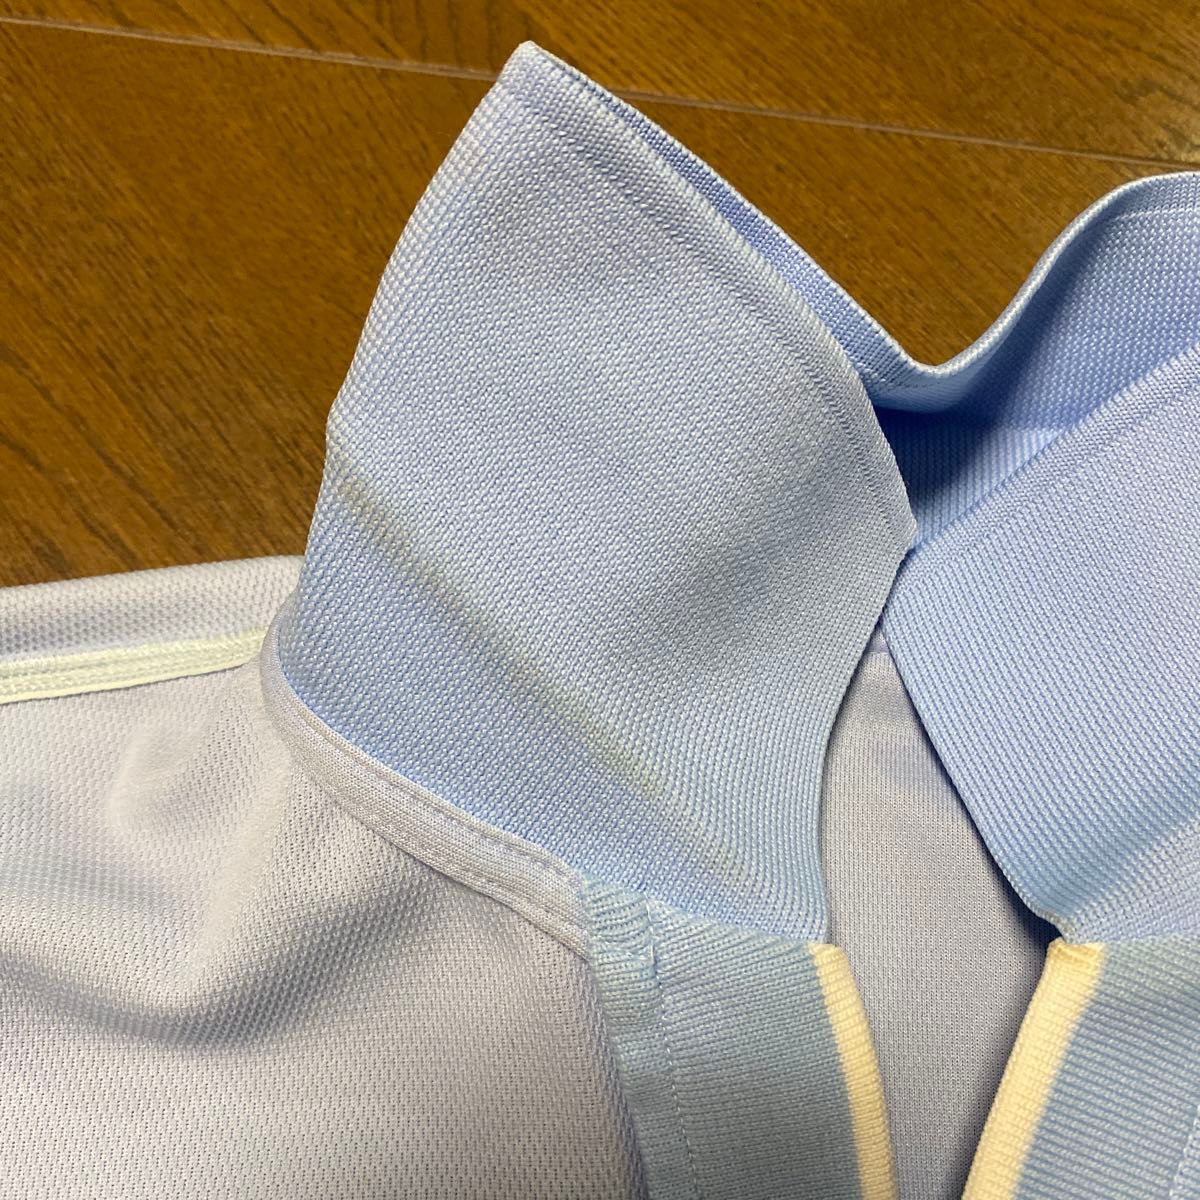 【XXIO】ゼクシオ　ゴルフ半袖ポロシャツ　ブルー　M  ゴルフウェア　日本製　 半袖シャツ GOLF